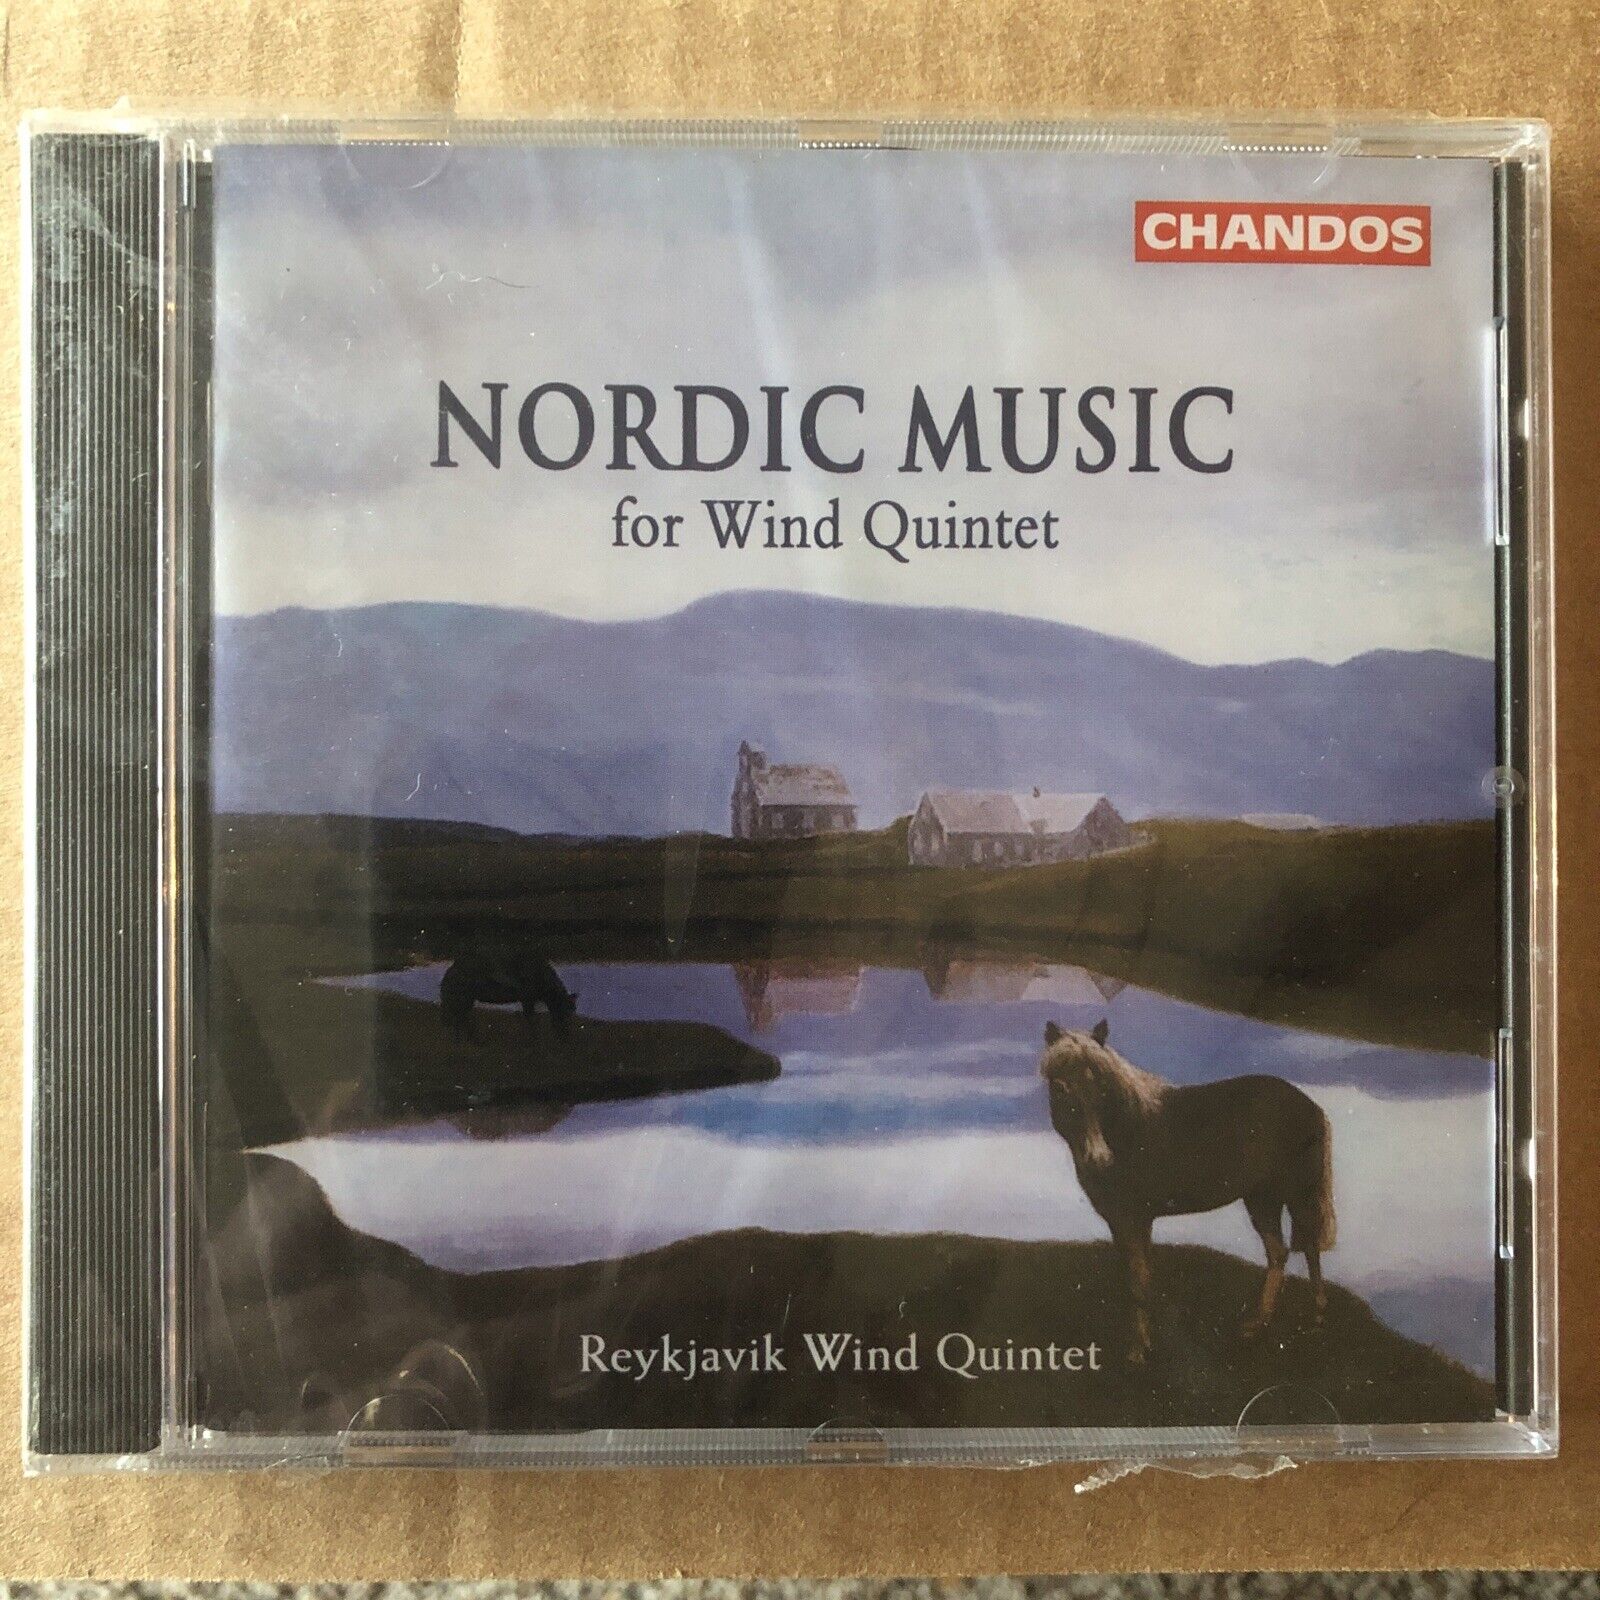 Nordic Music for Wind Quintet - Reykjavik Wind Quintet  CD 2000 (Chandos) New CC